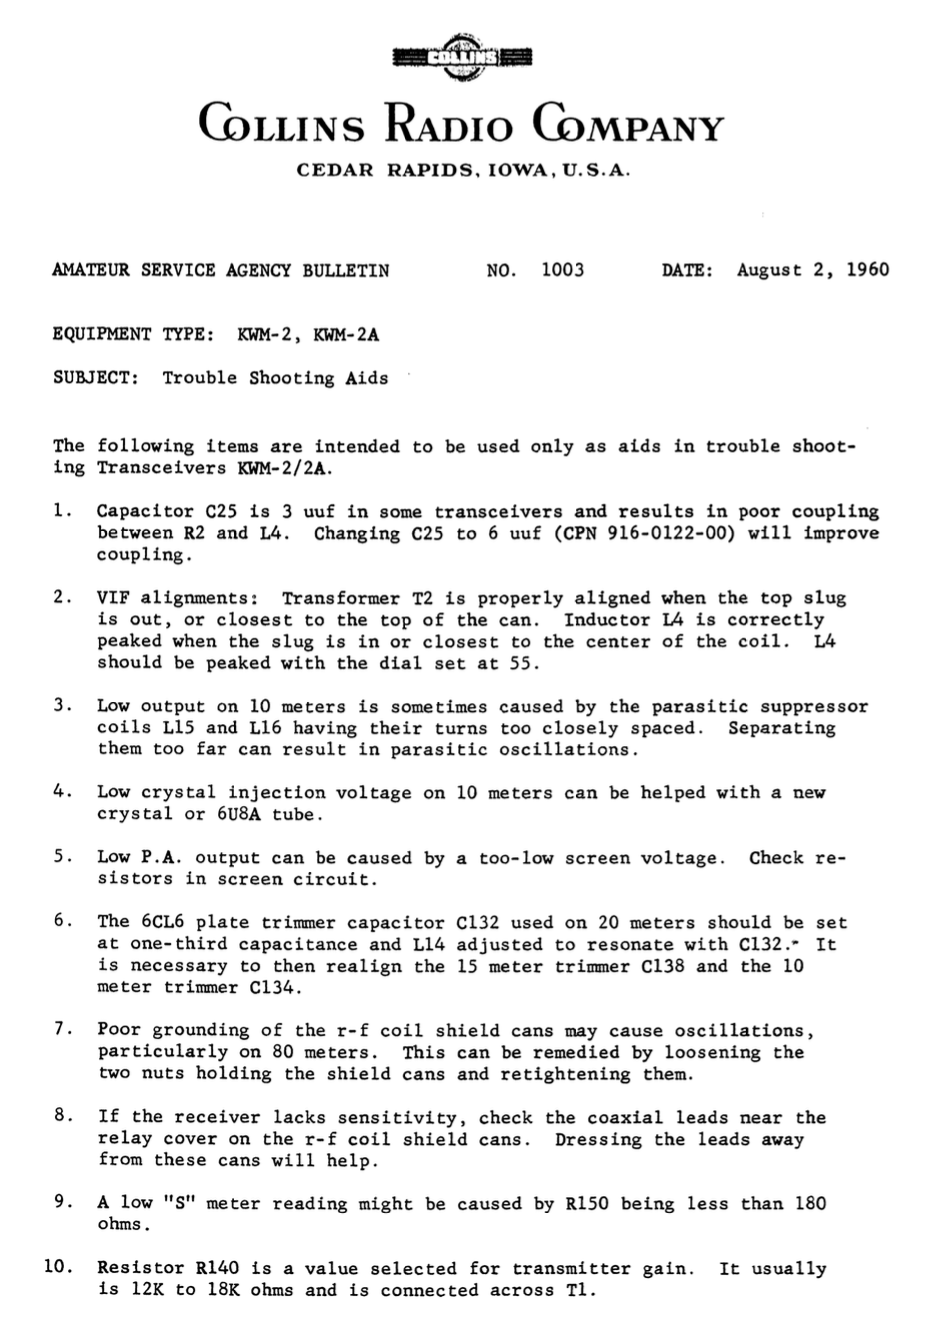 Collins Amateur Service Agency Bulletin Number 1003 (1960-08)